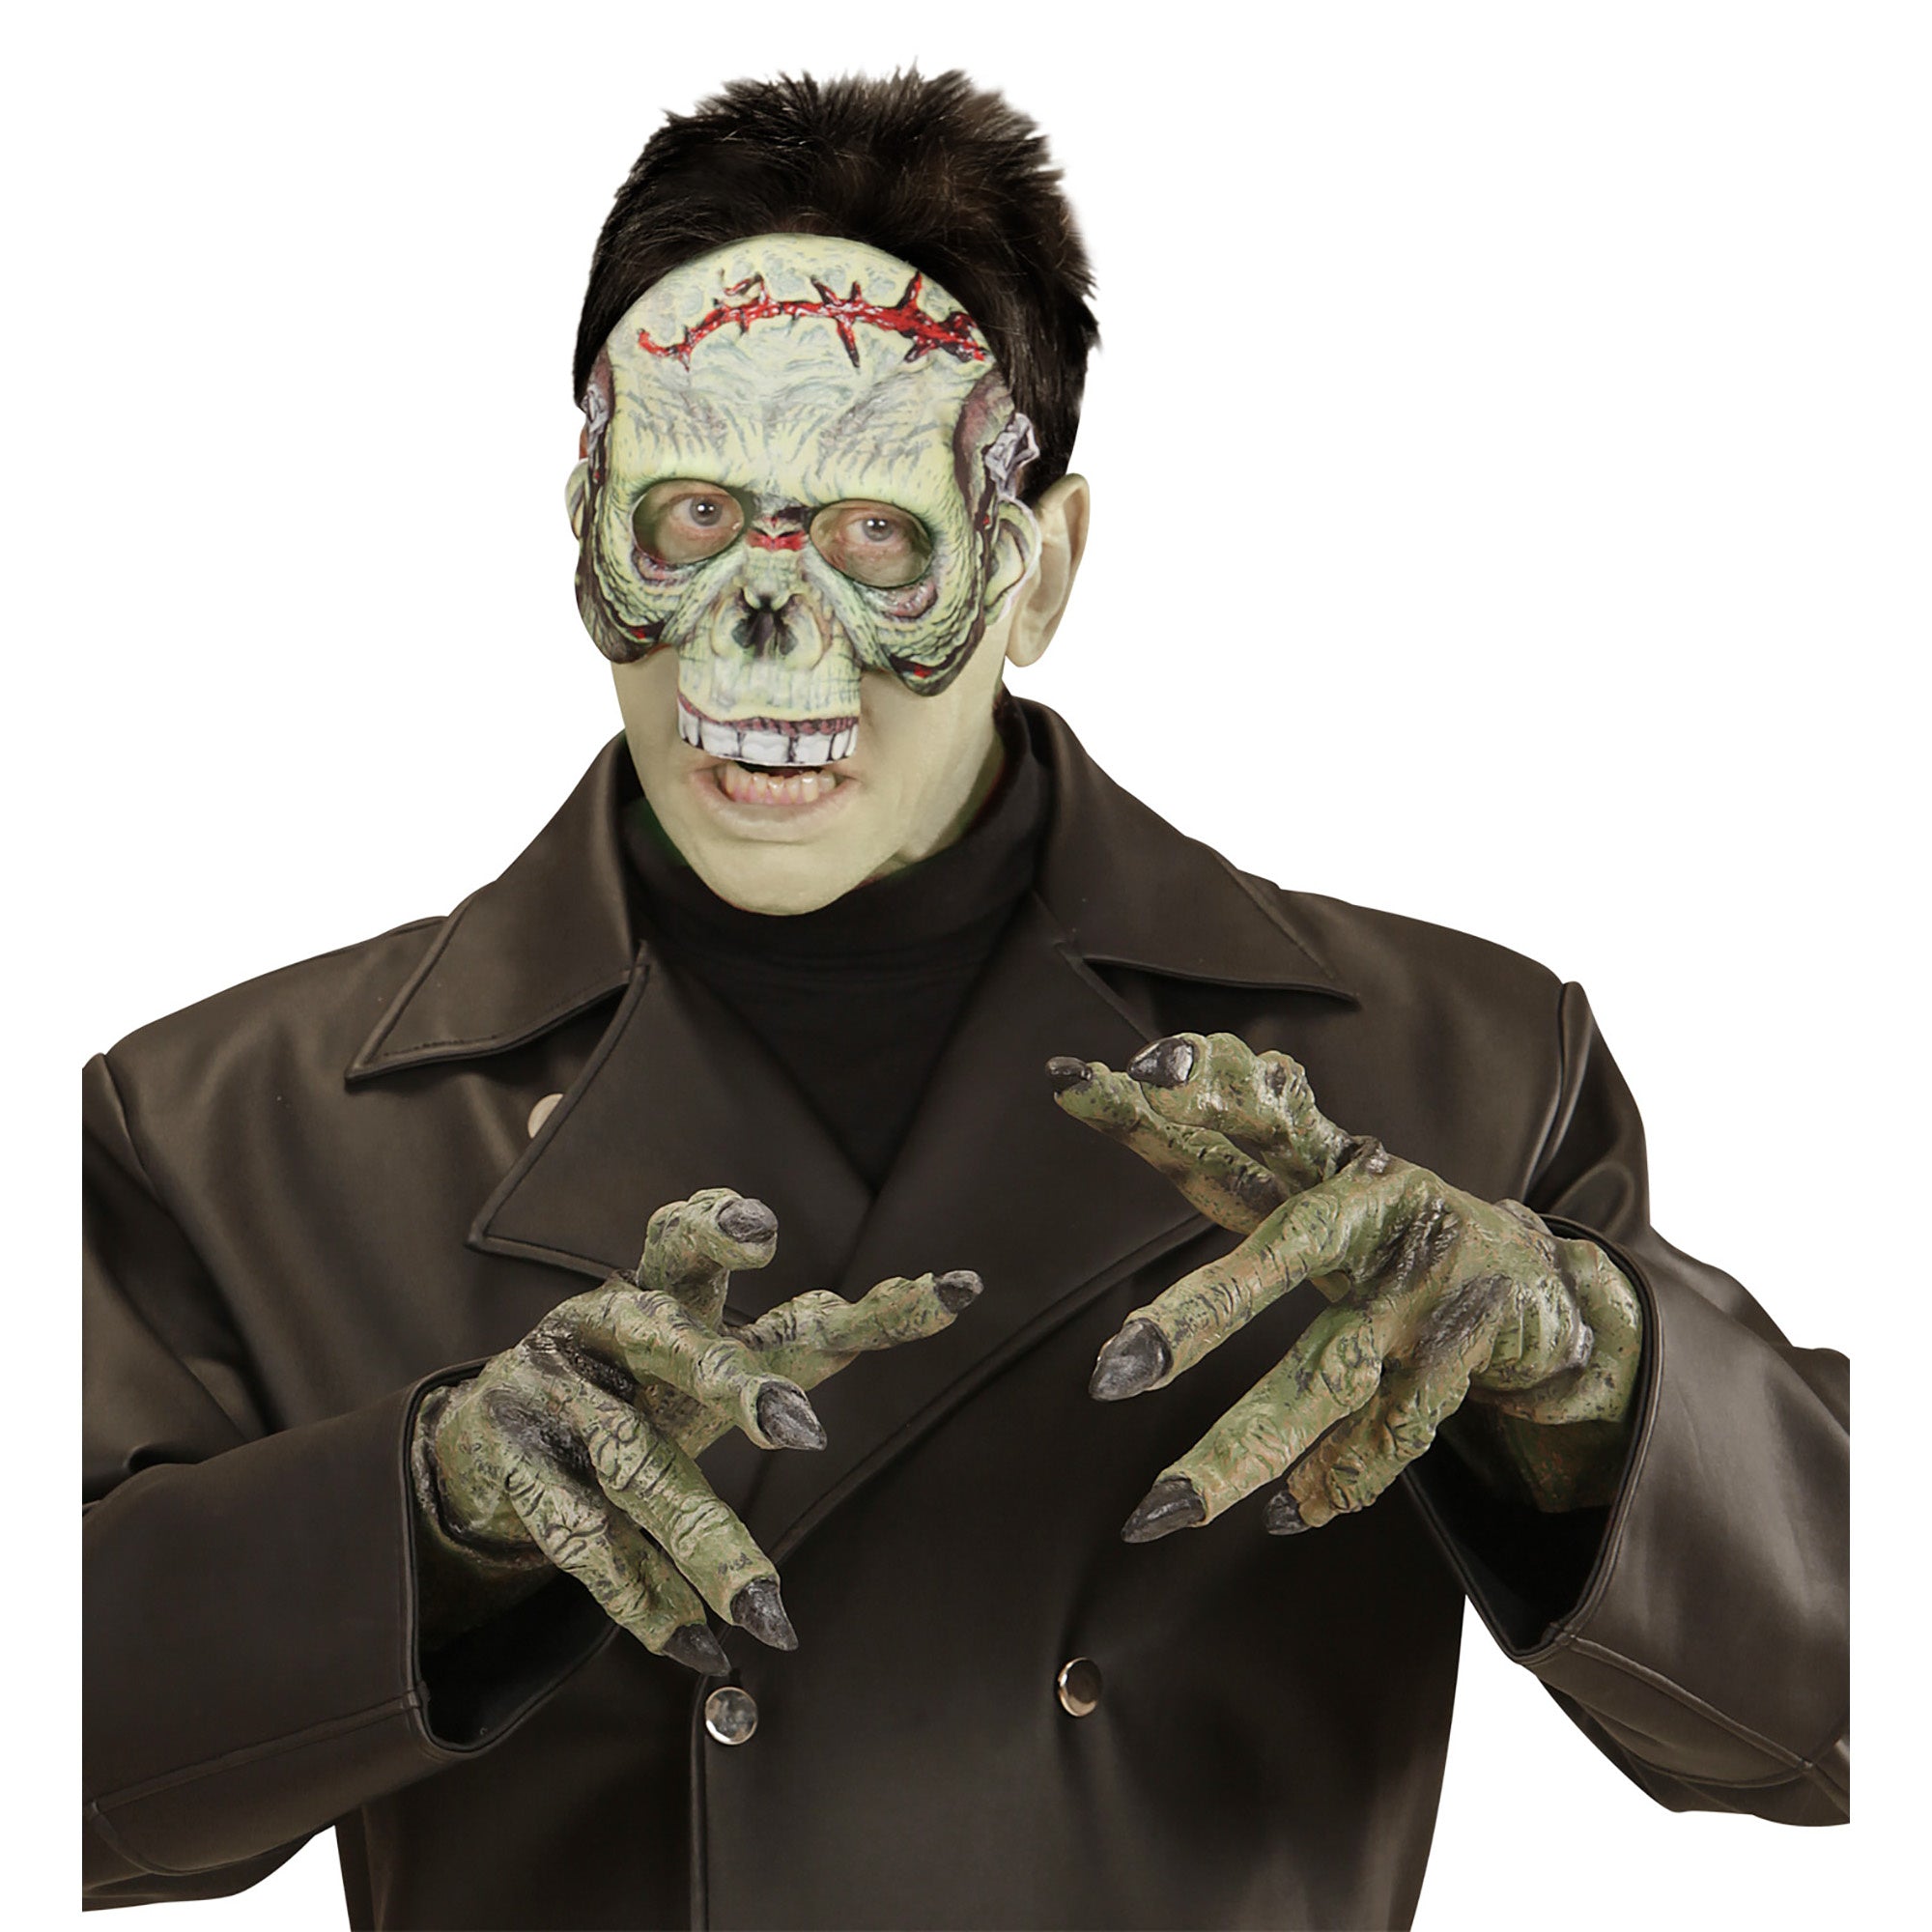 Eng monster masker voor Halloween